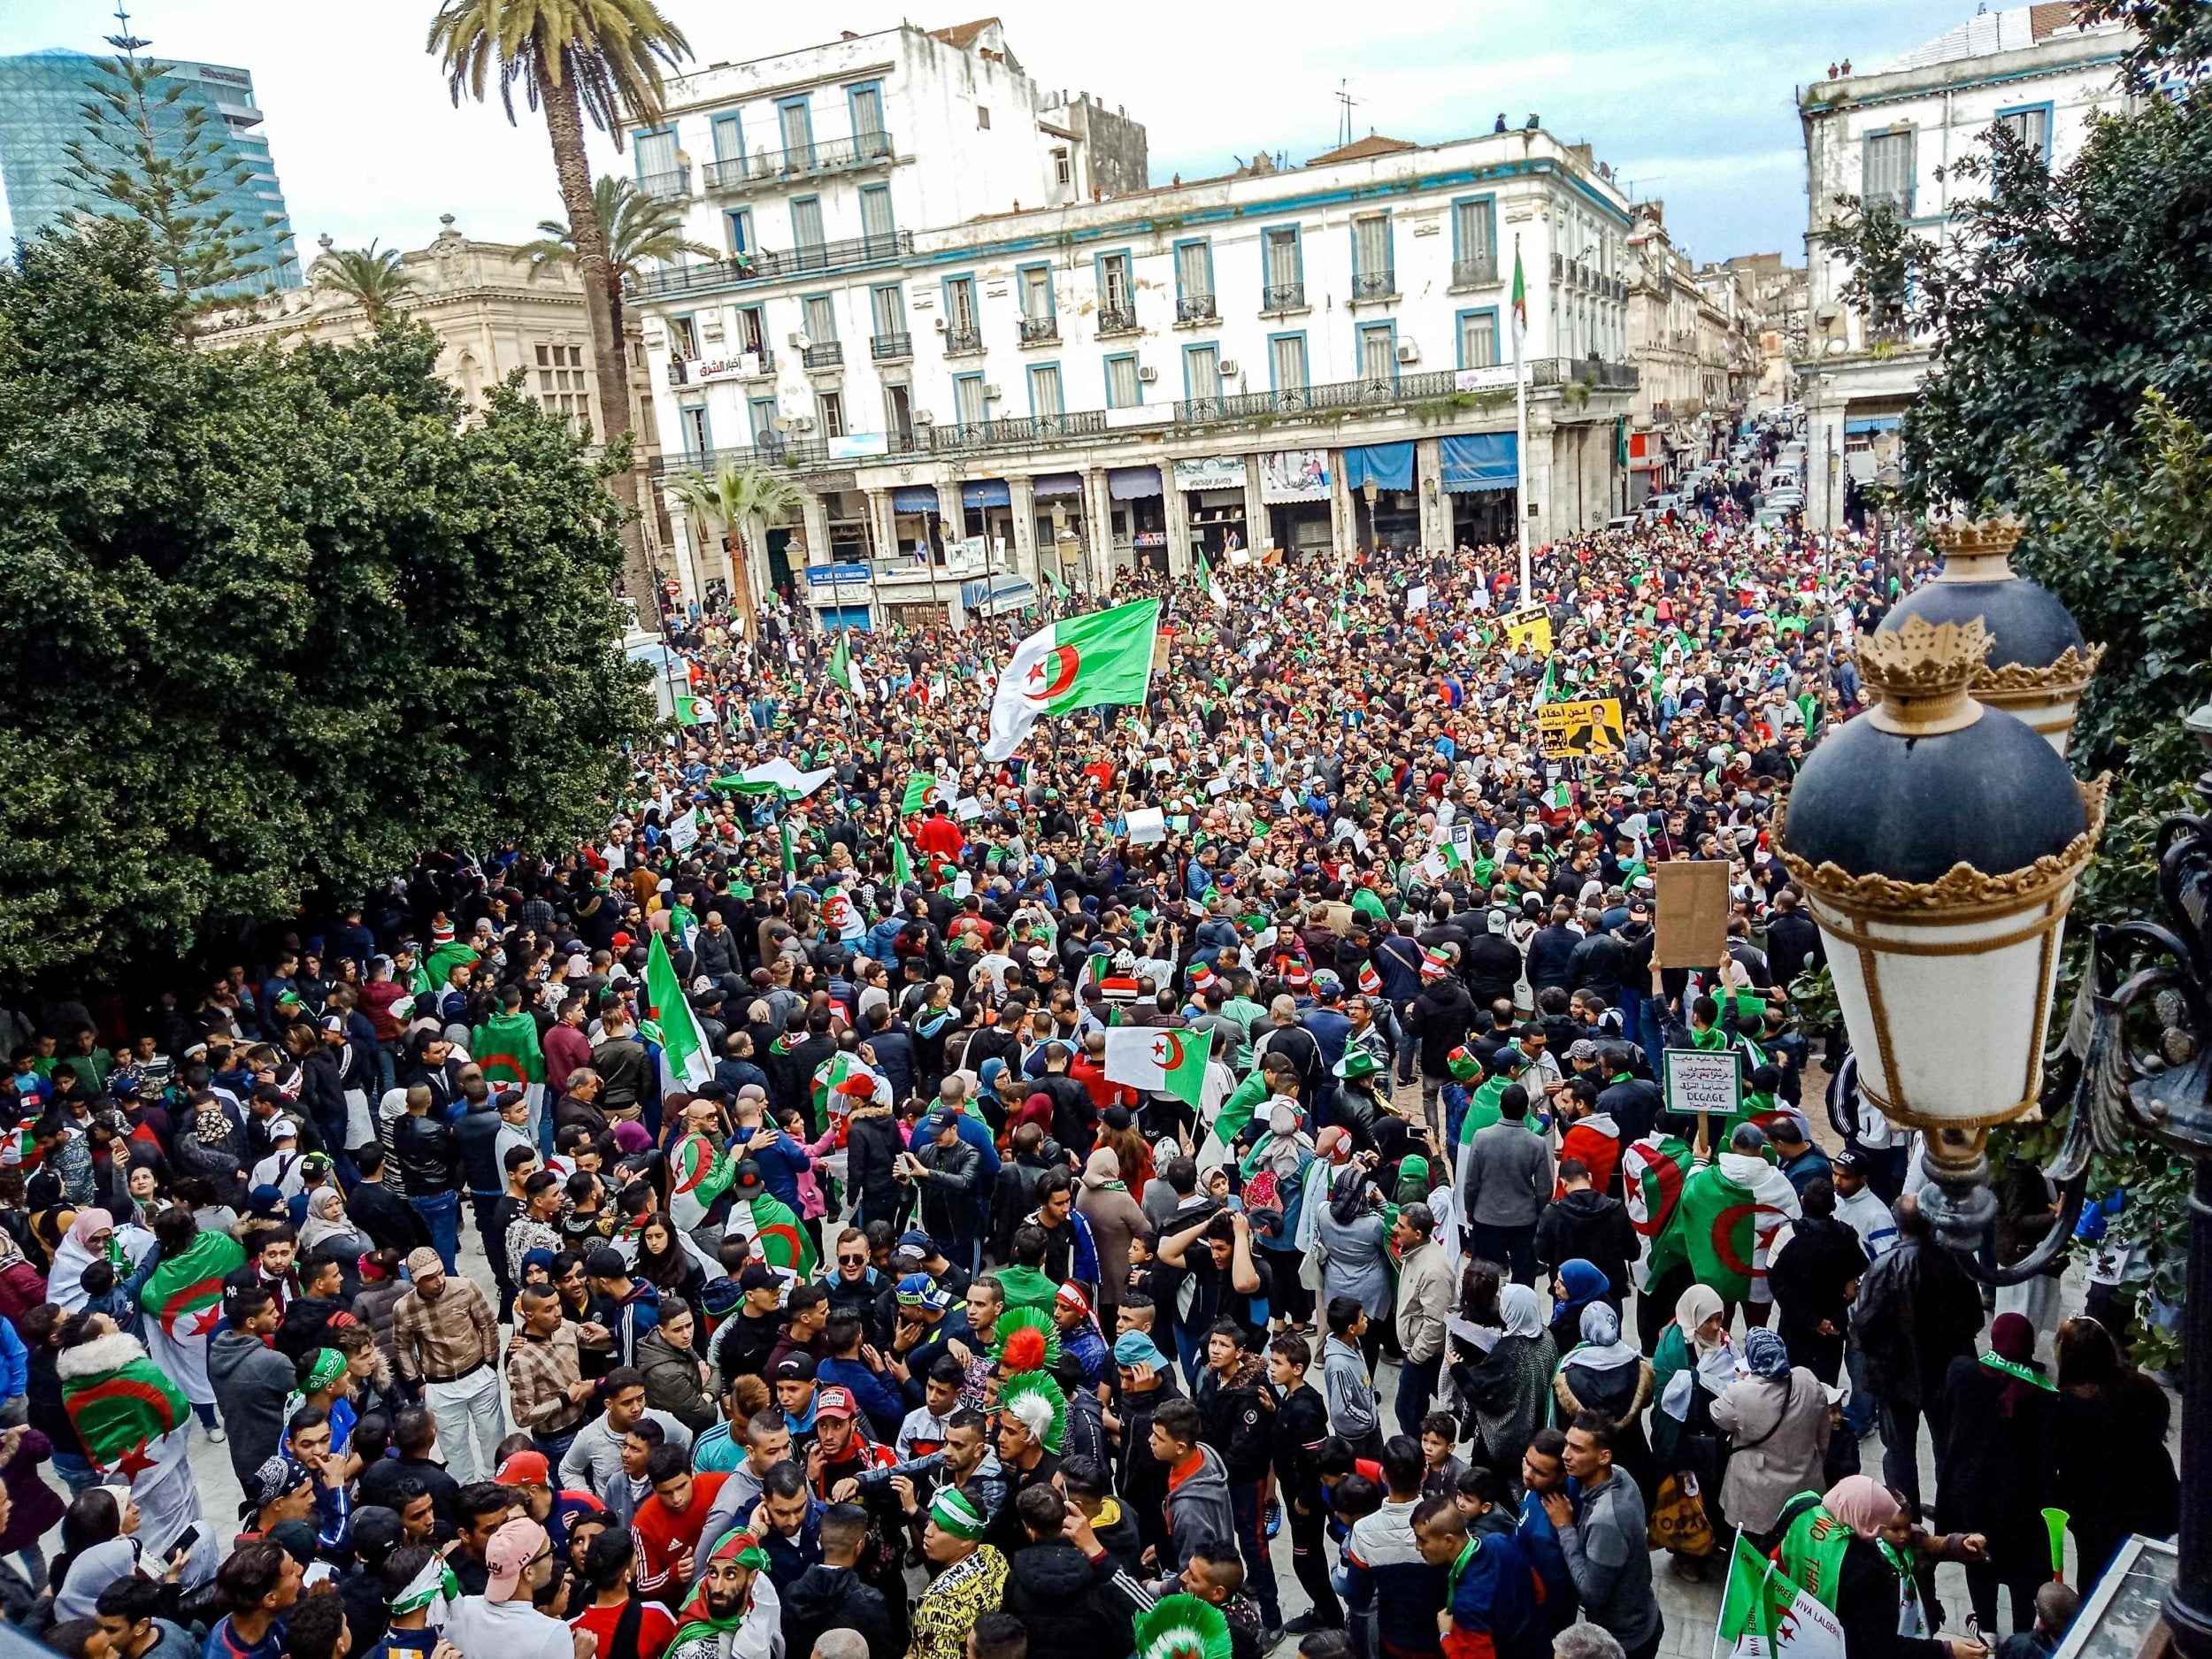 &apos;Don&apos;t make donkeys of the people&apos;: Algerians take to the streets as anger towards ailing president grows